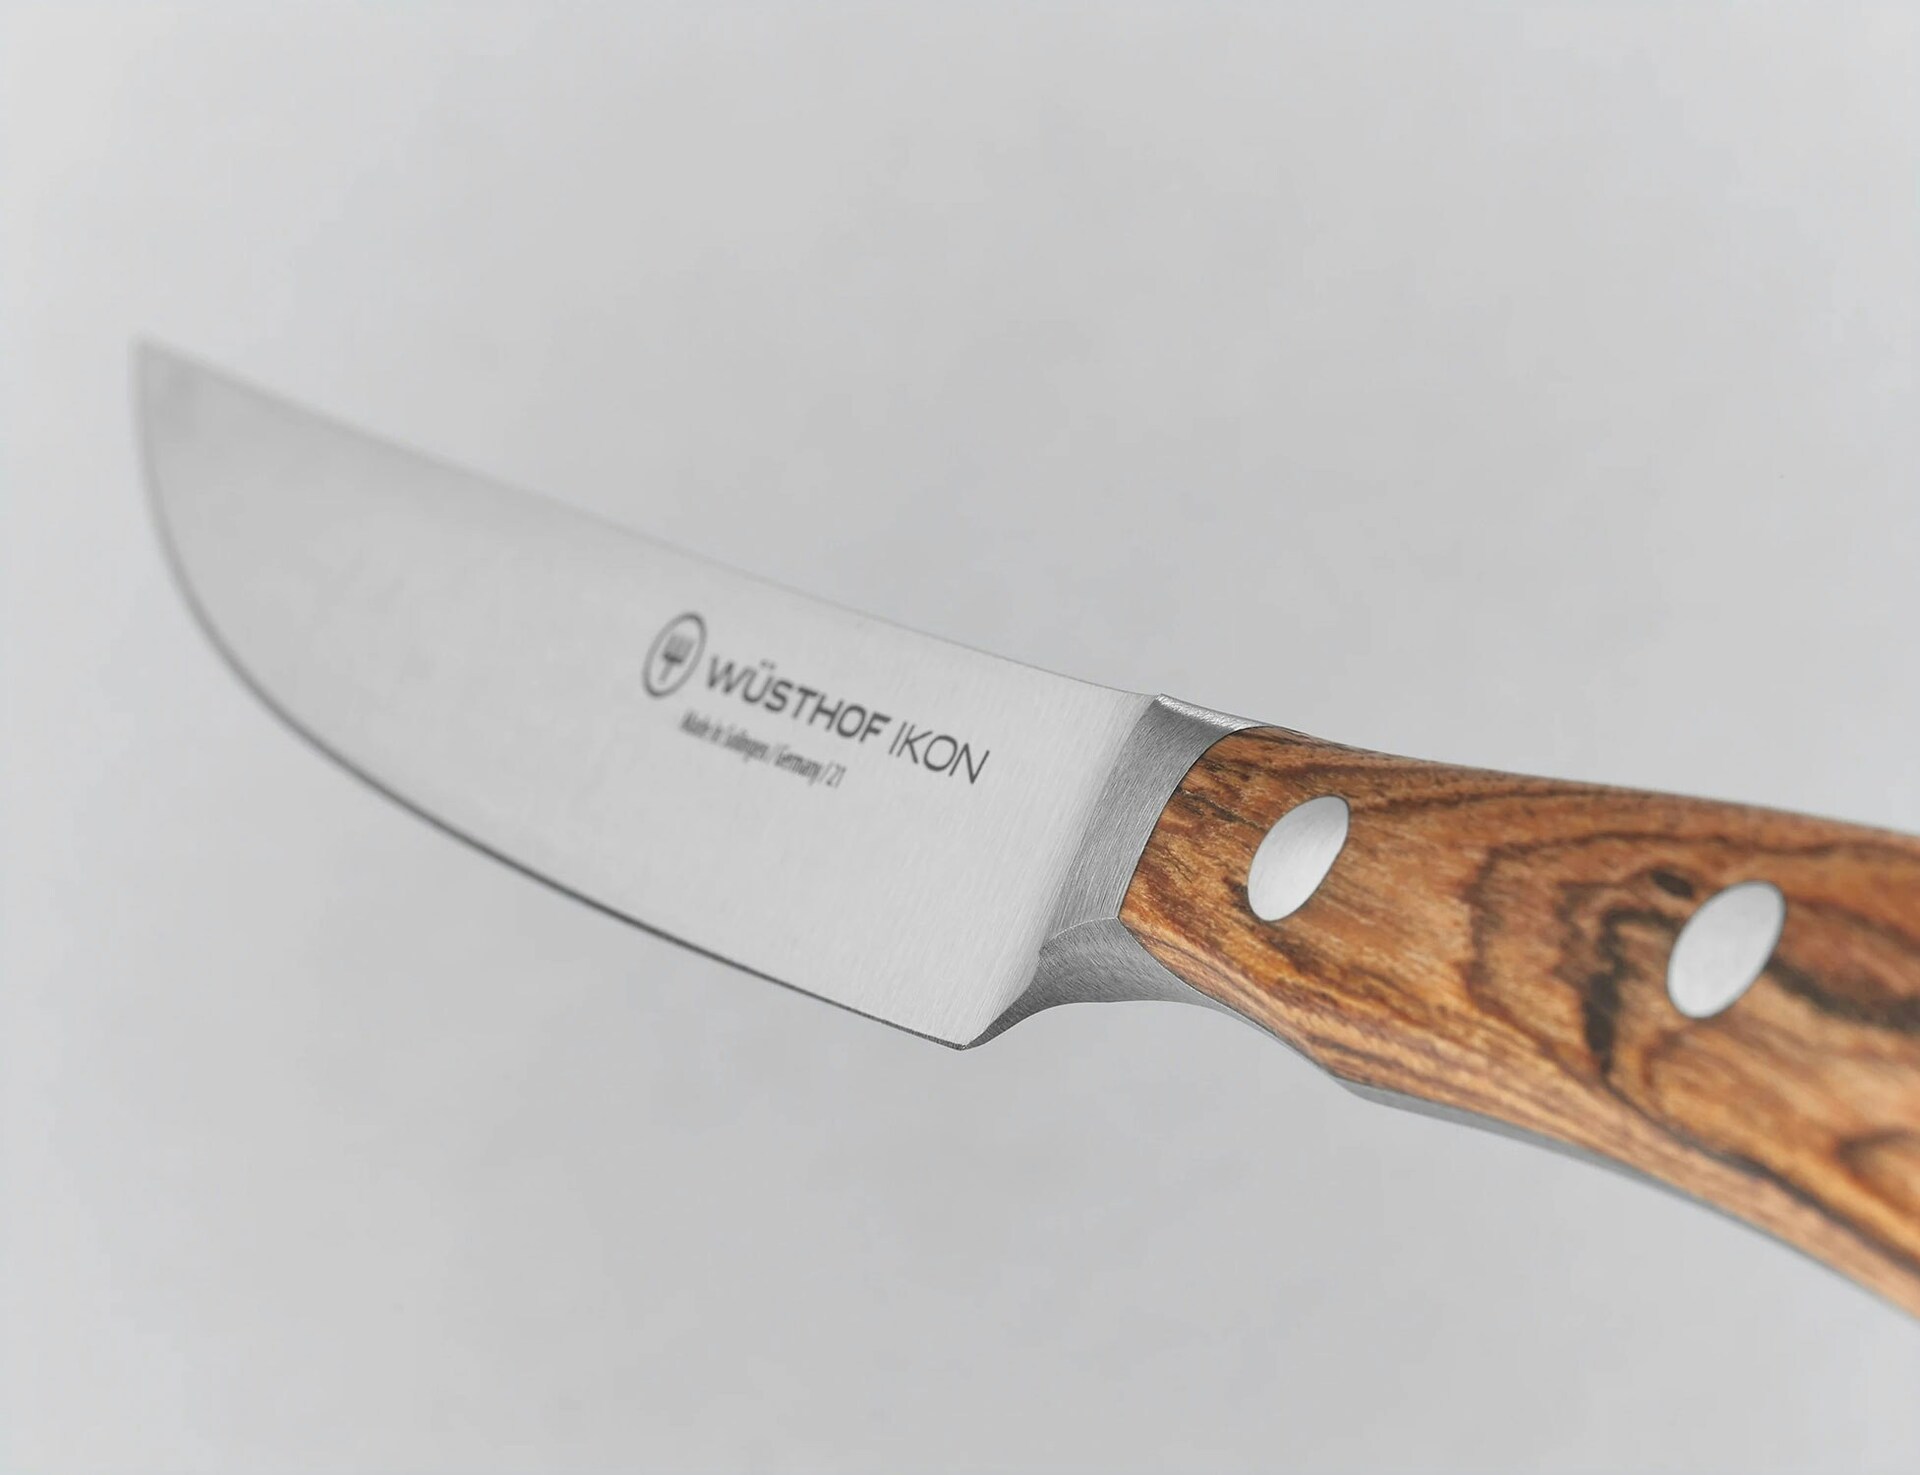 https://royaldesign.com/image/2/wusthof-ikon-steak-knives-with-case-3